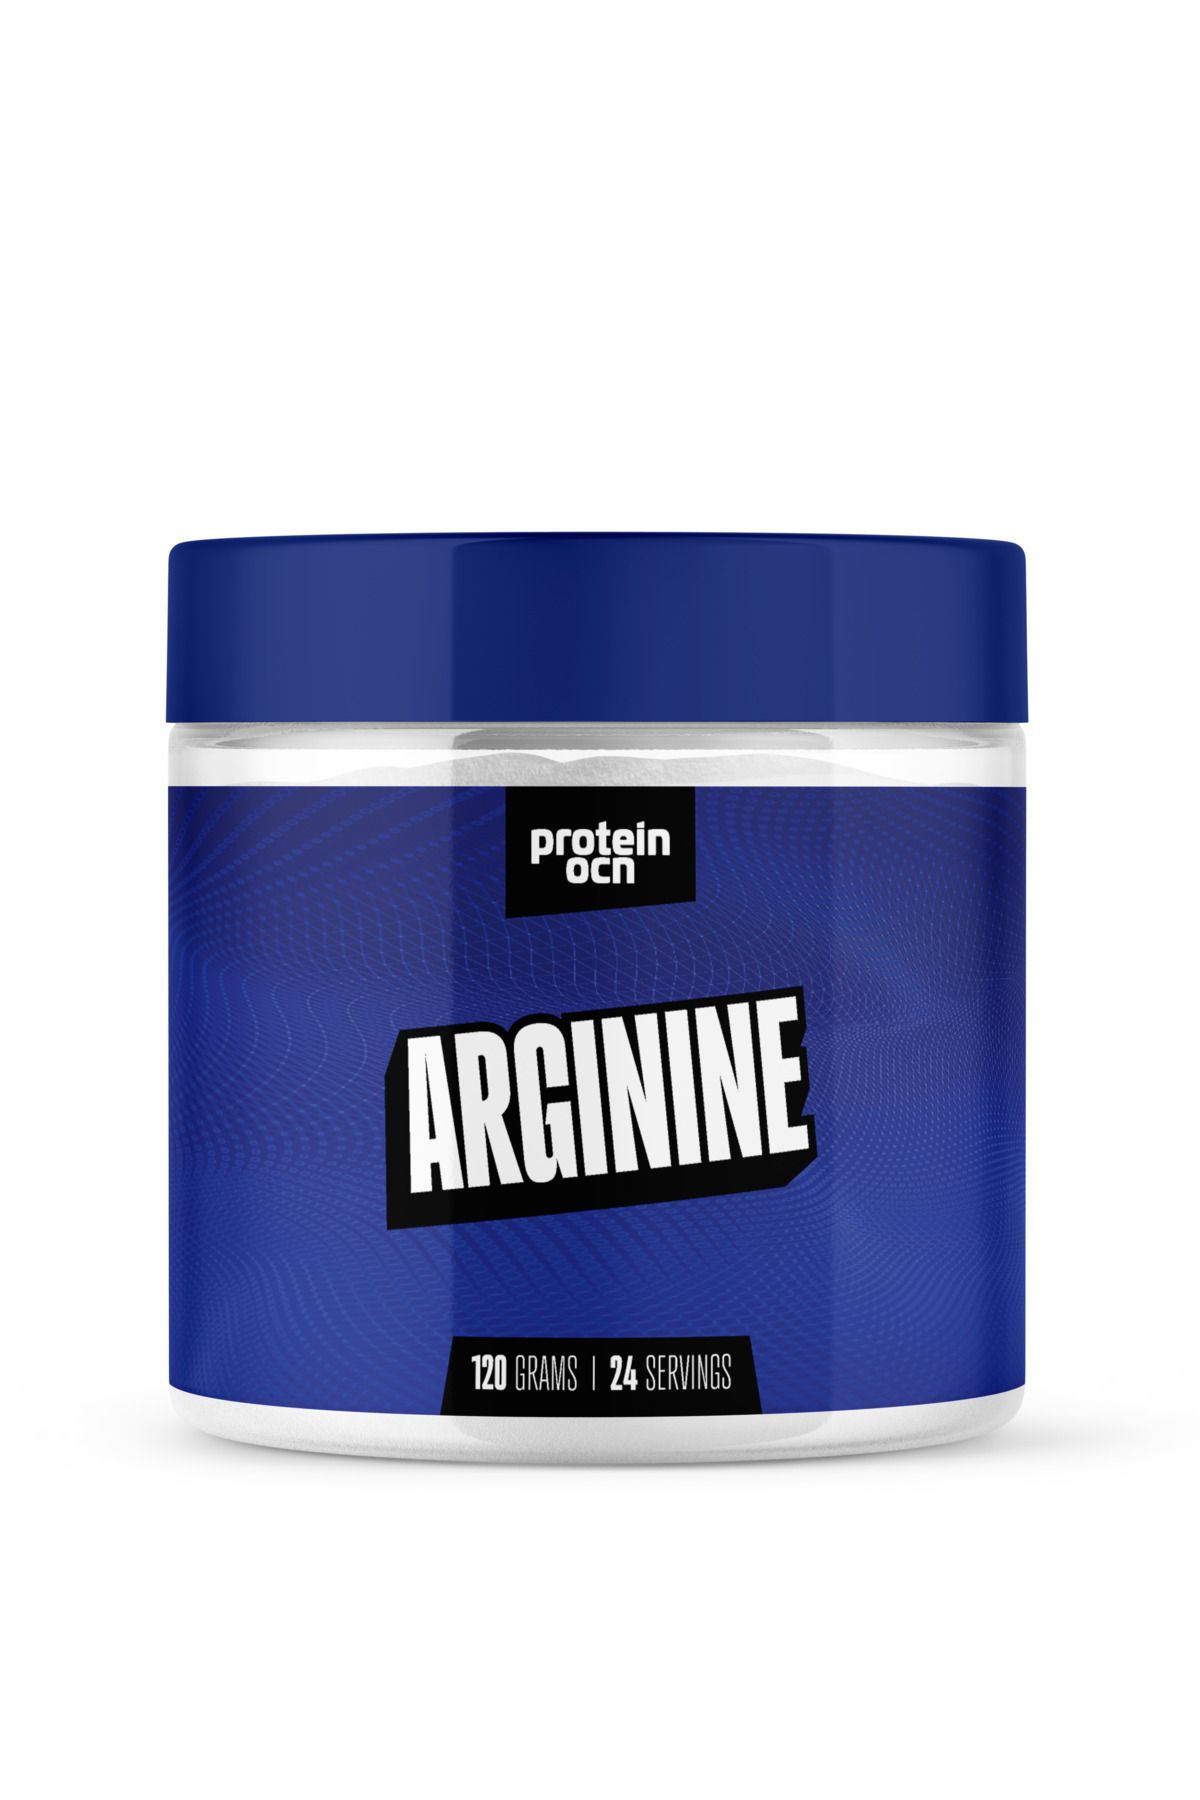 Proteinocean Arginine - 120g - 24 Servis